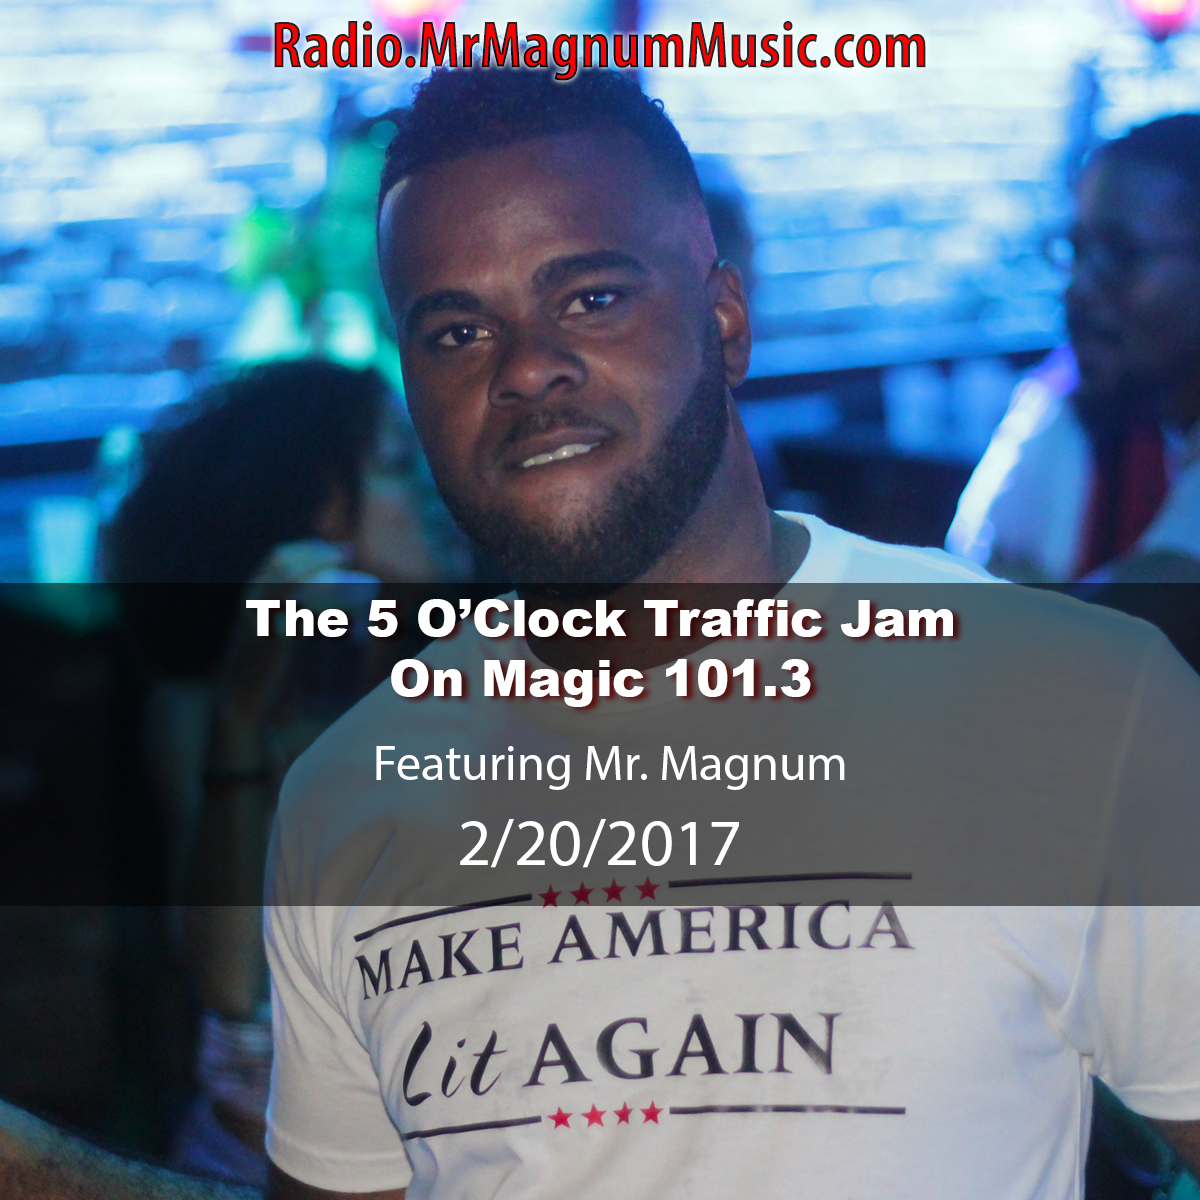 The 5 O’Clock Traffic Jam 2-20-2017 on Magic 101.3